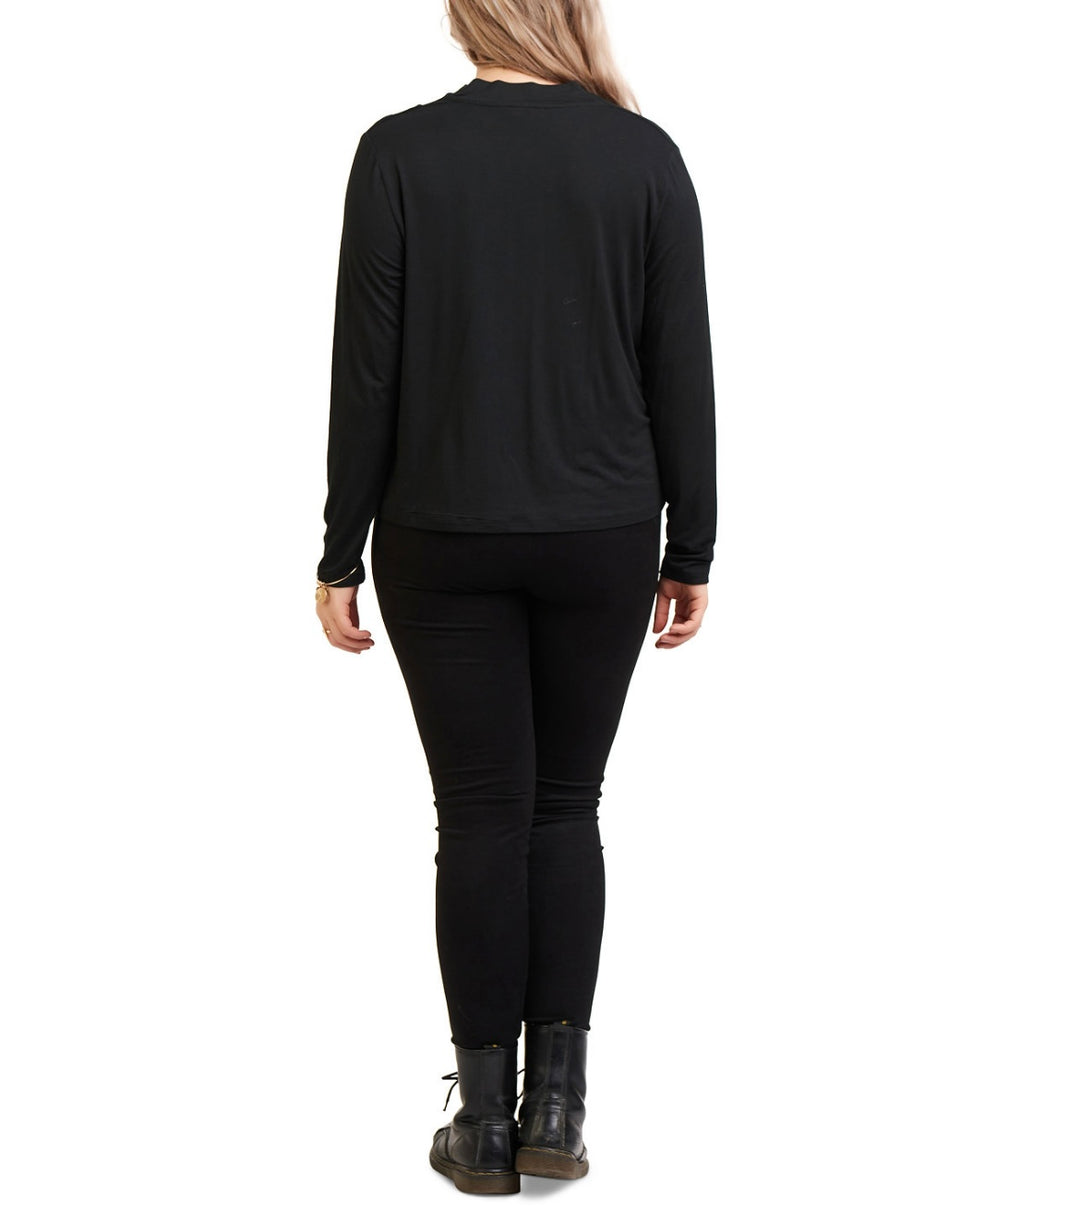 Black Tape Women's Long Sleeve Trendy Cowl-Neck Top Black Plus Size 2X